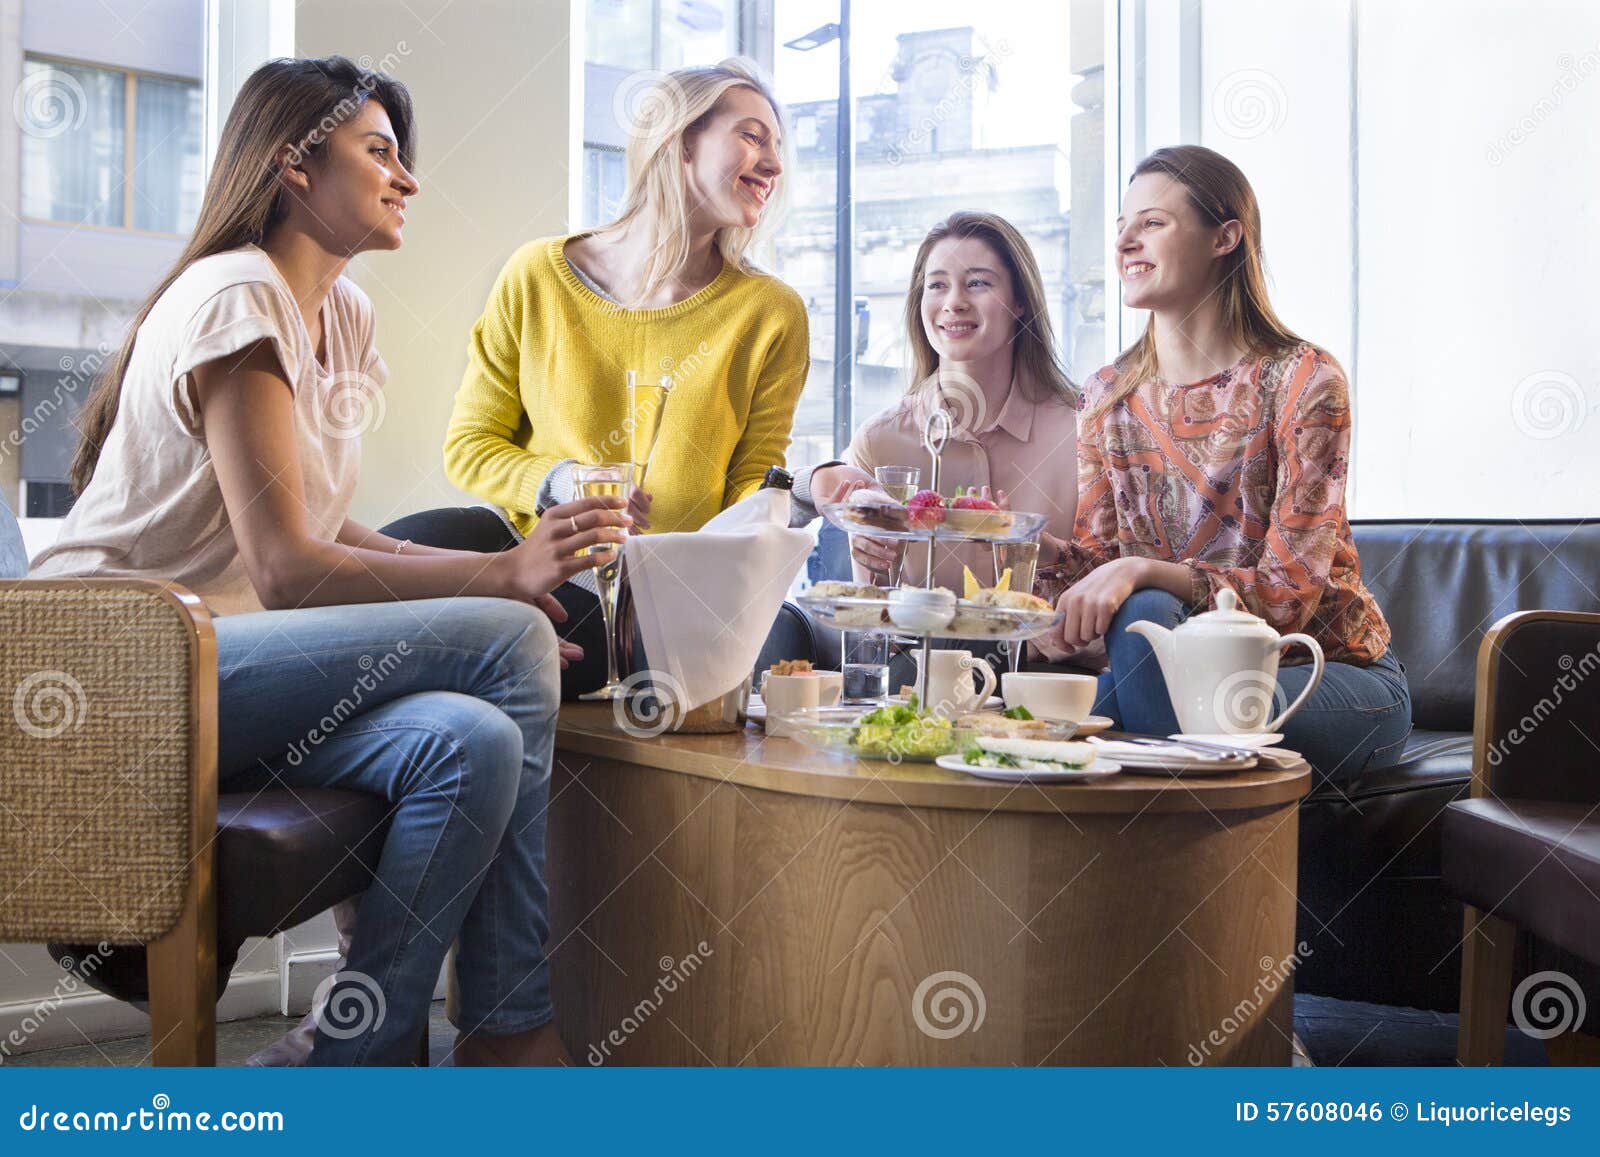 four women having afternoon tea